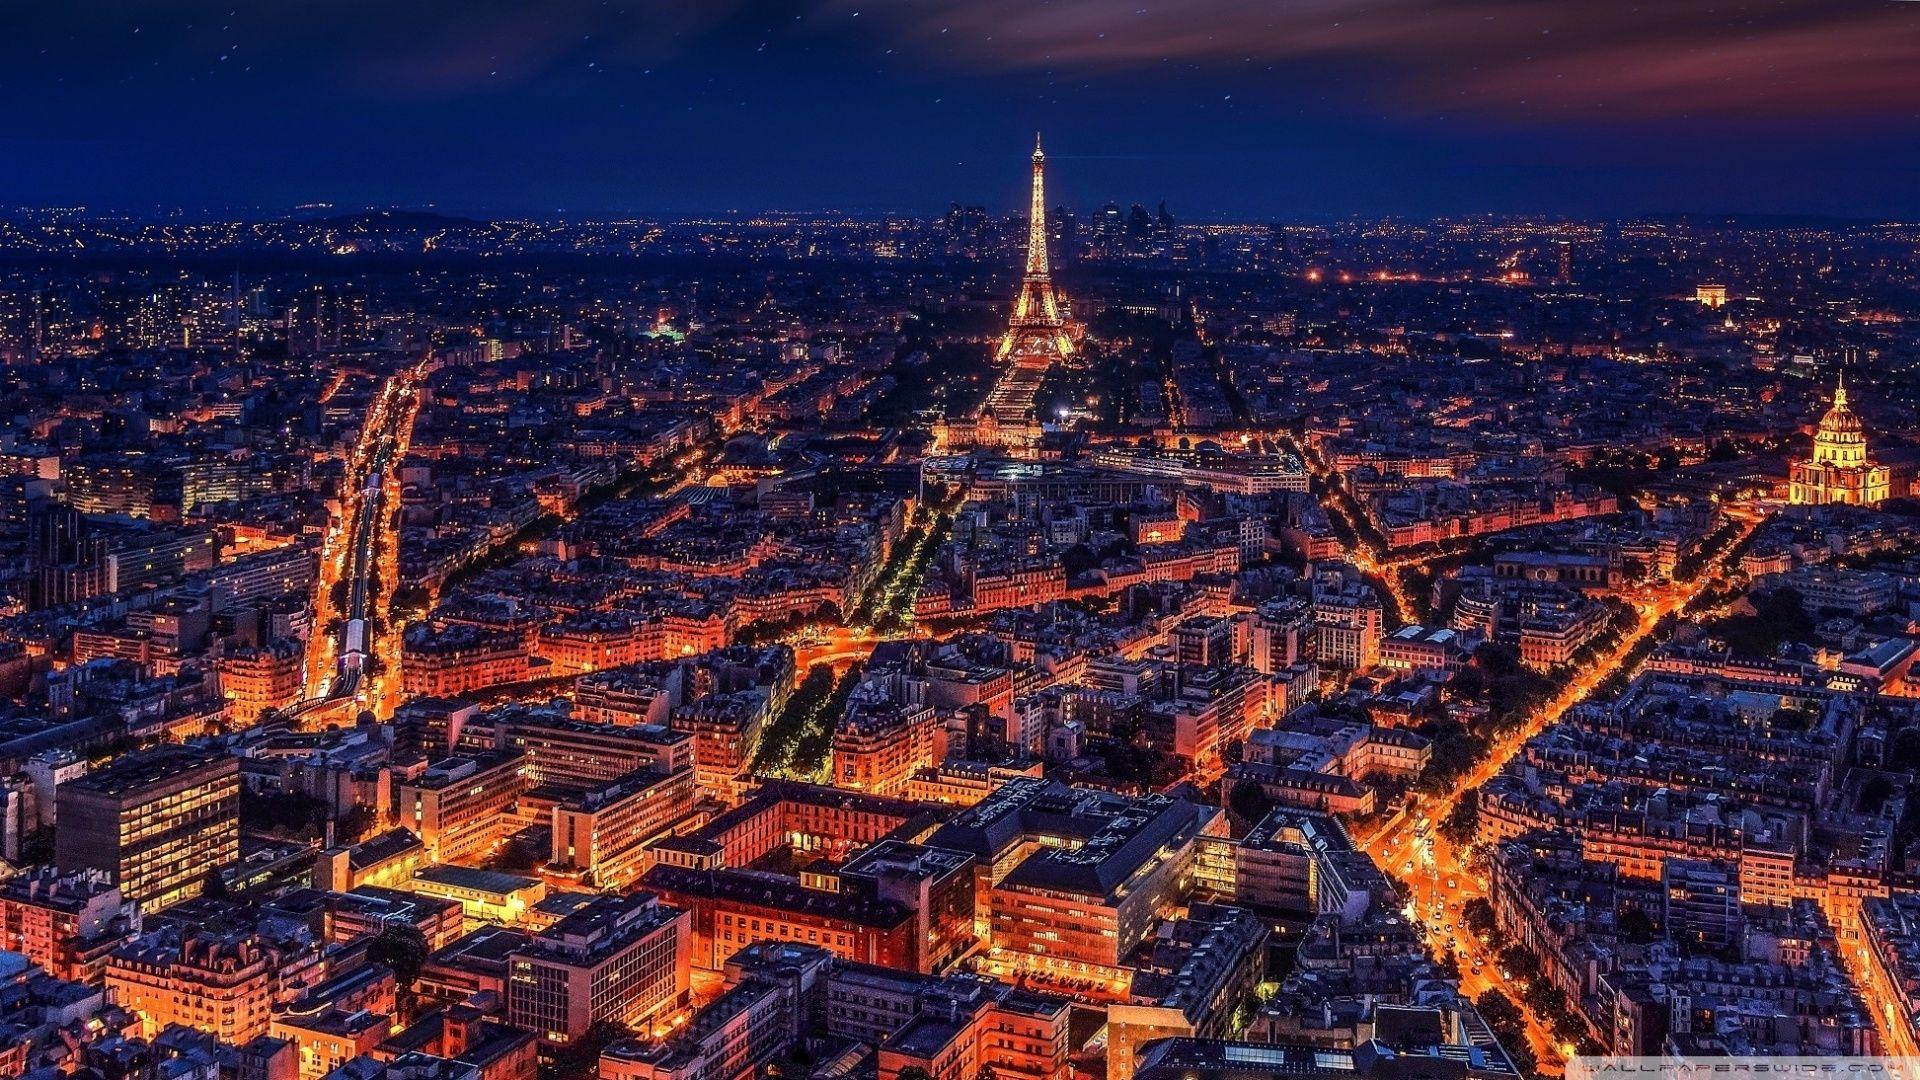 Paris at Night Wallpapers - Top Free Paris at Night Backgrounds ...